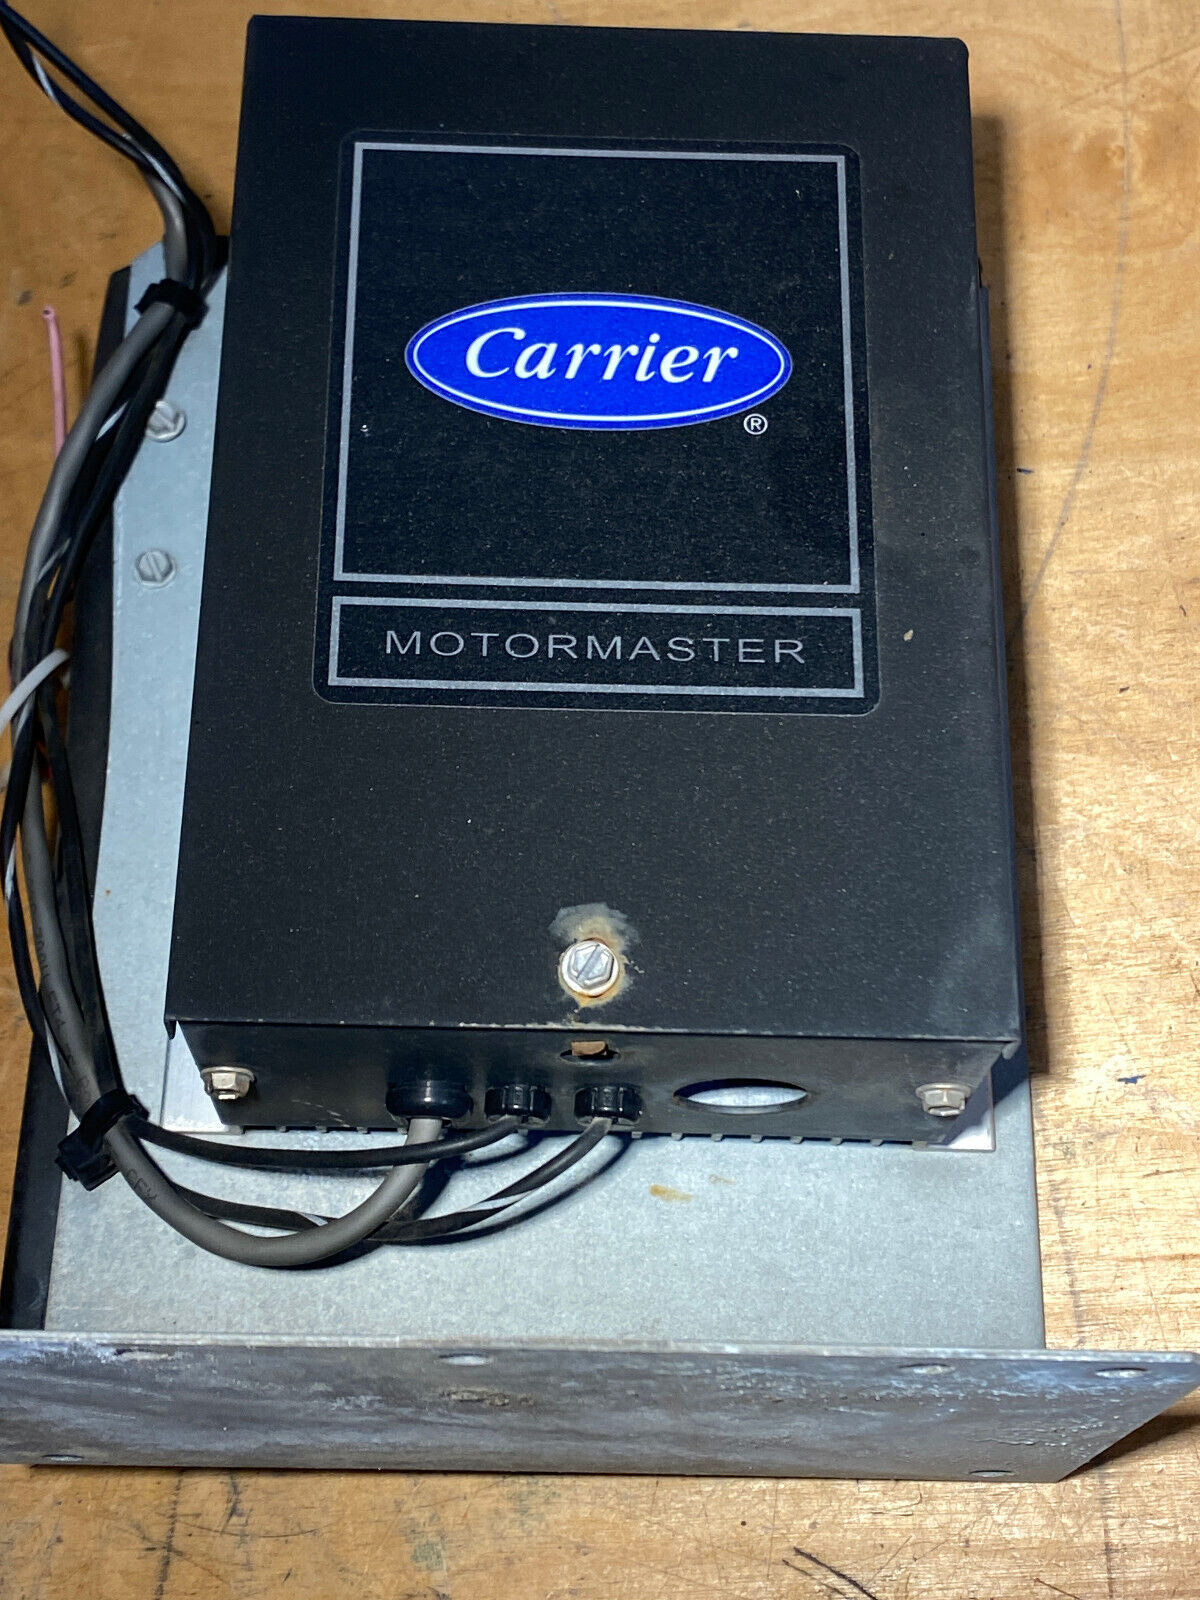 Carrier Motormaster CESO130096 MN: 990-156-1B